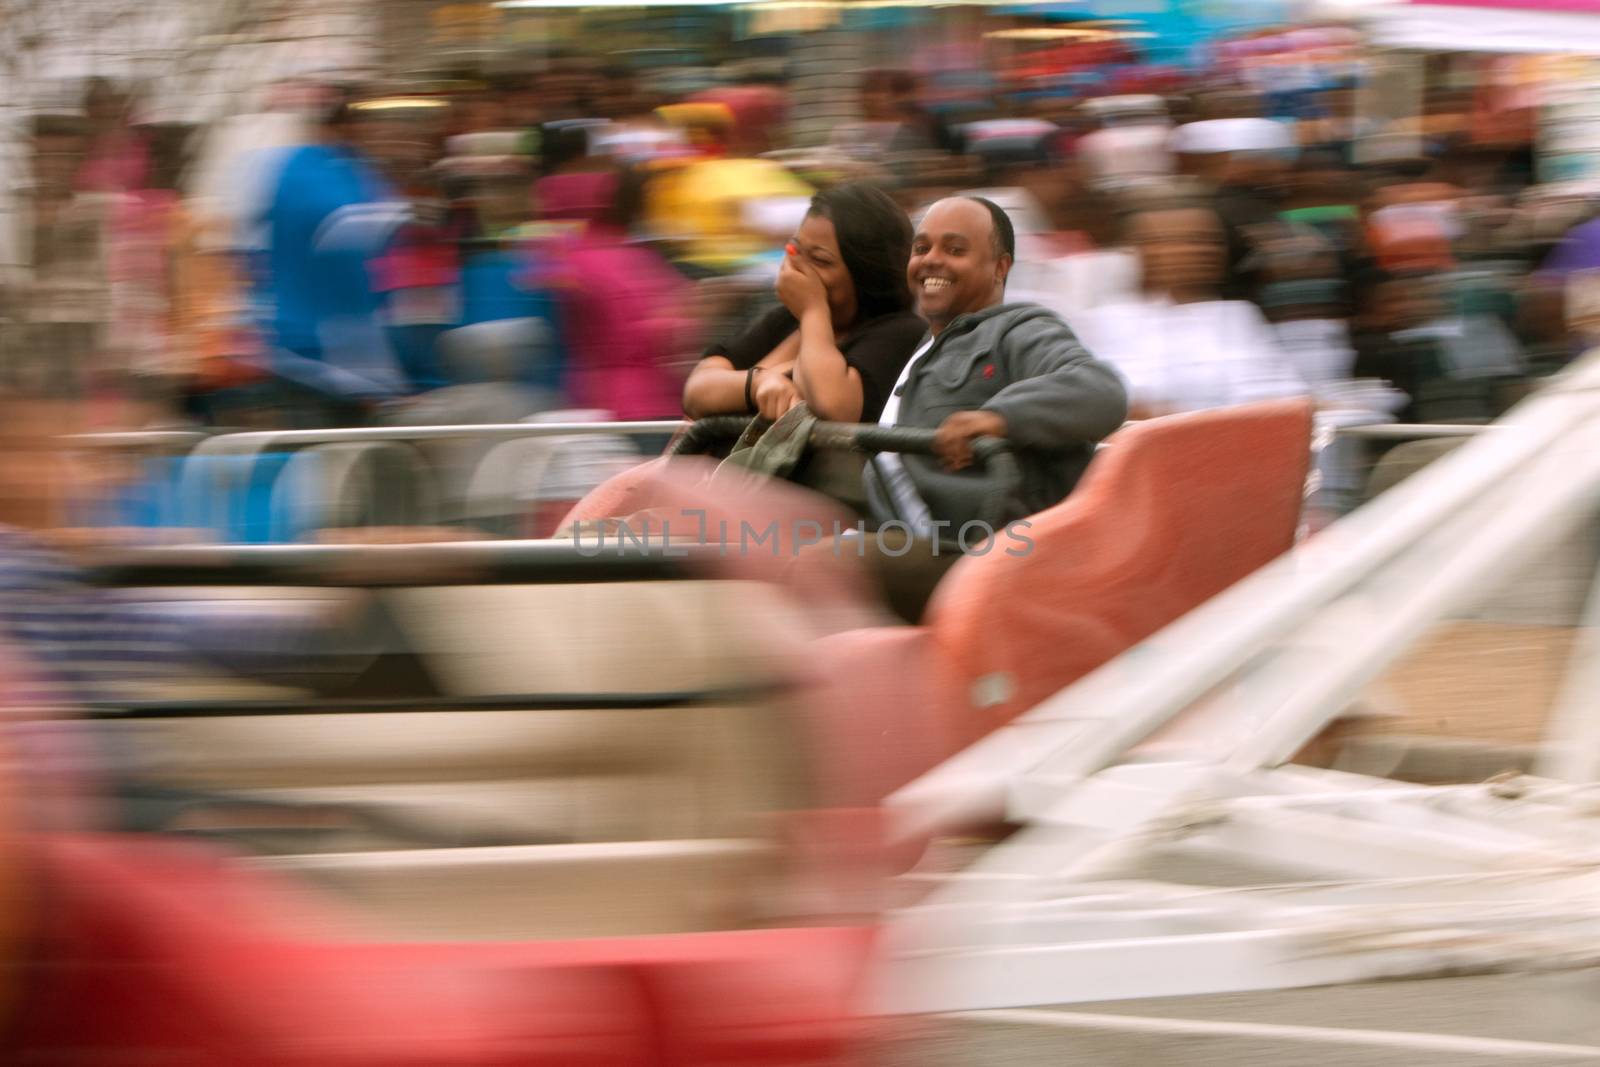 Couple Laughs Riding Scrambler Carnival Ride At Atlanta Fair by BluIz60